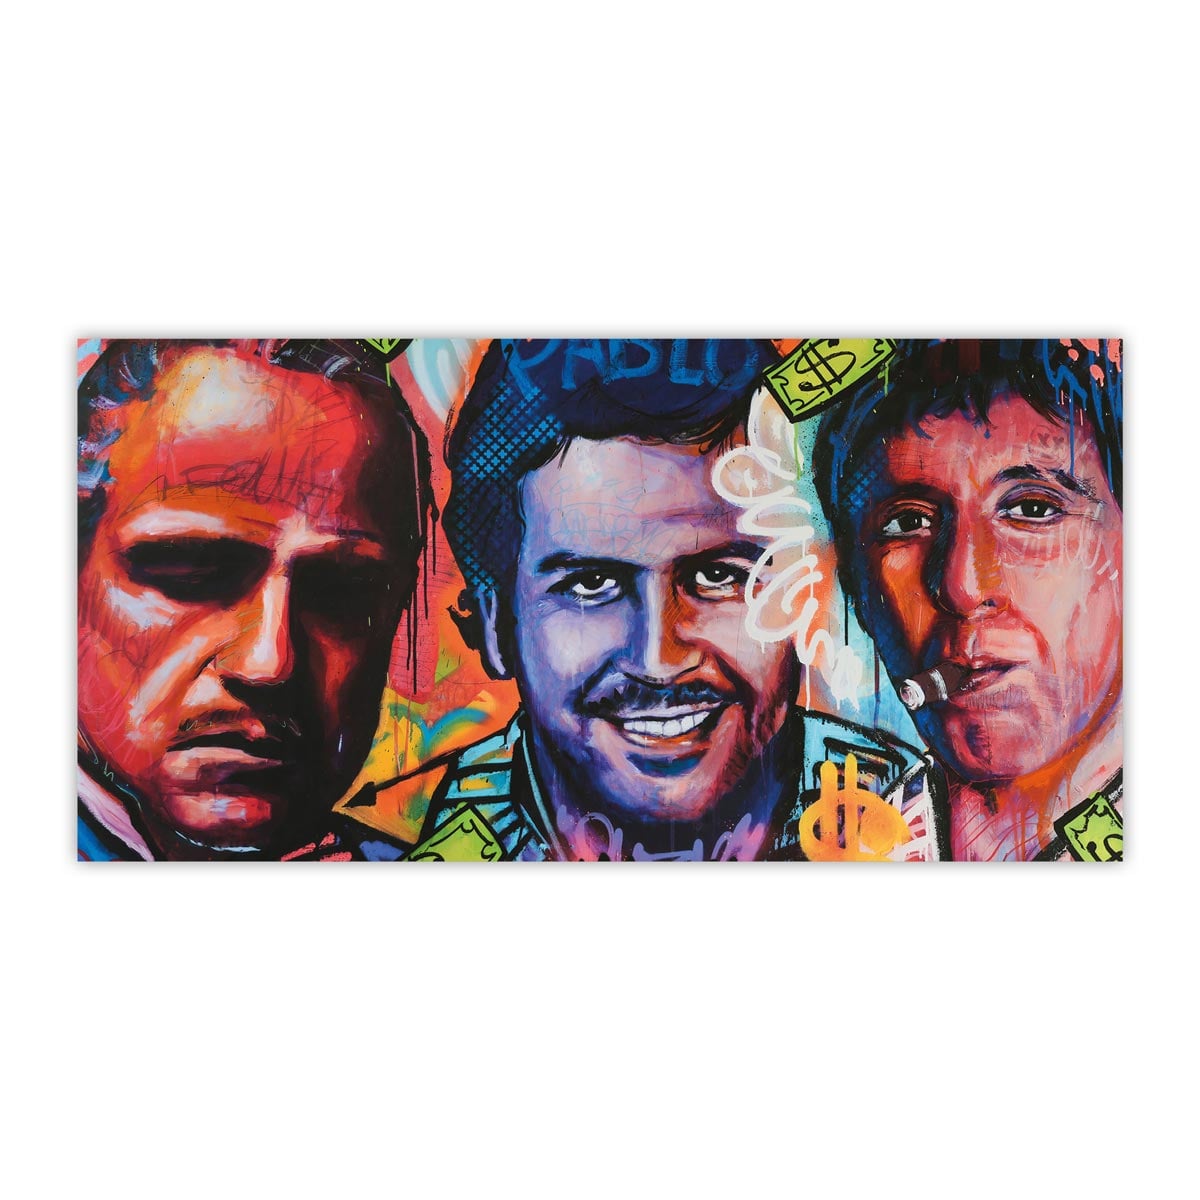 Pablo Escobar Don Corleone Scarface Canvas Print Wall Art